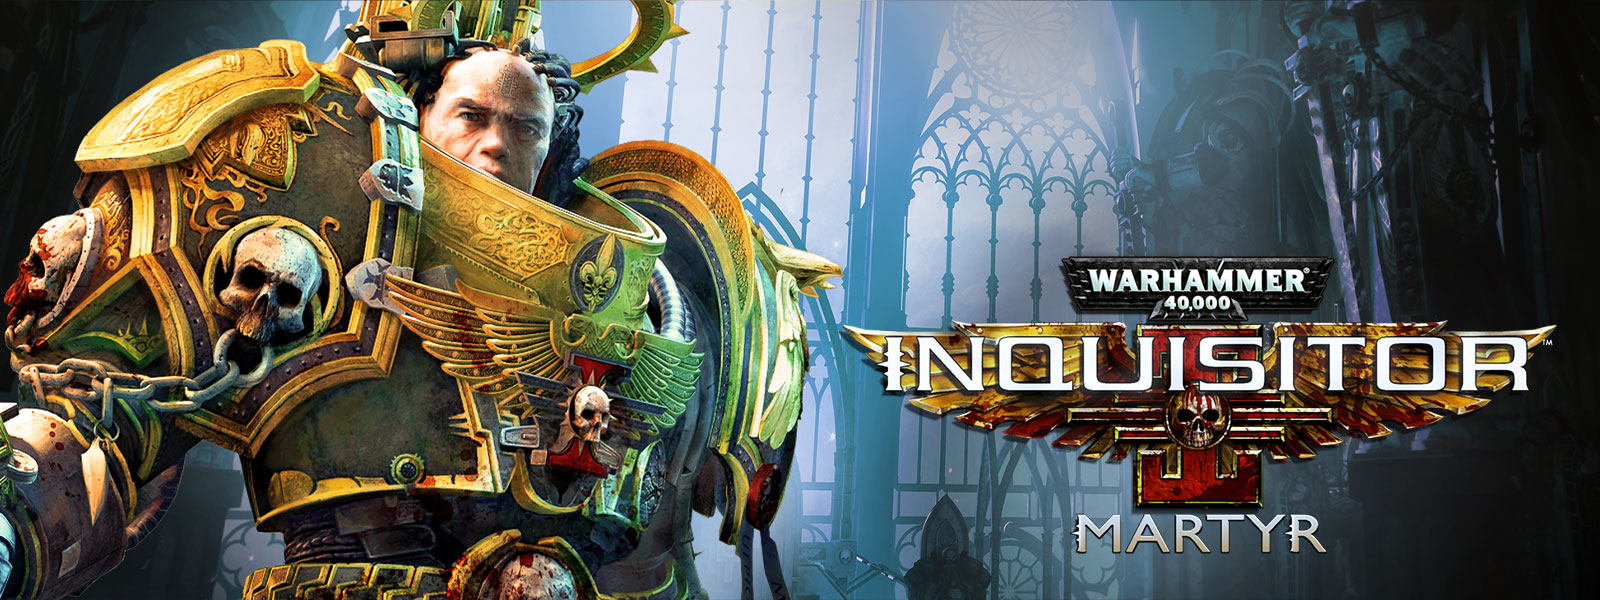 Warhammer 40,000: Inquisitor - Martyr, Um Inquisidor está numa catedral extravagante.